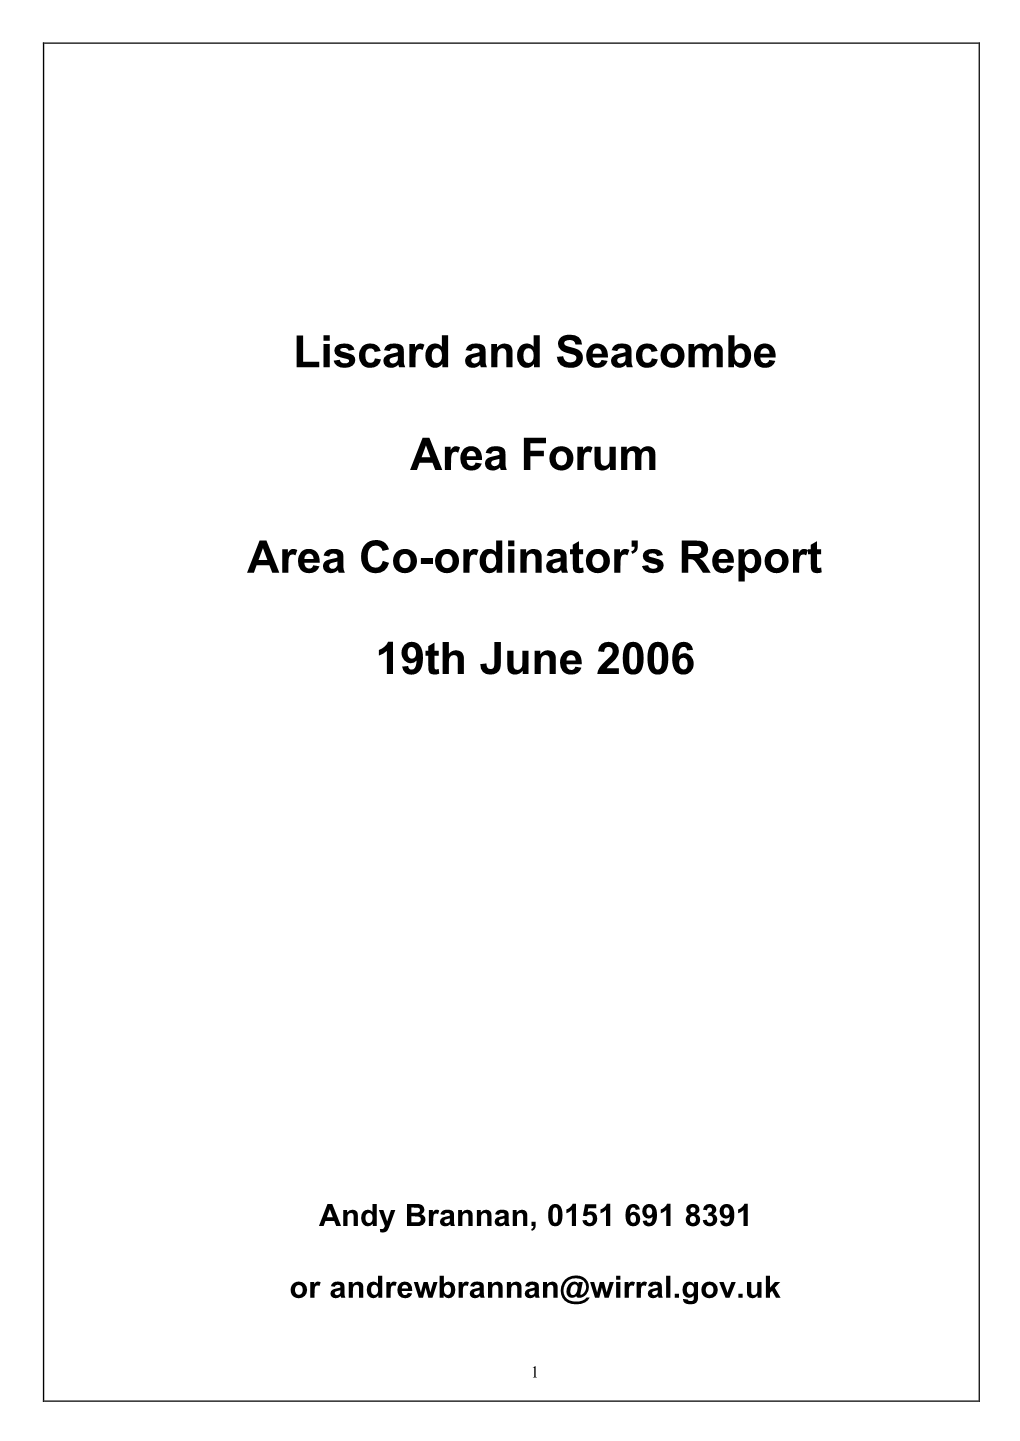 Liscard and Seacombe Area Forum Area Co-Ordinator's Report 19Th